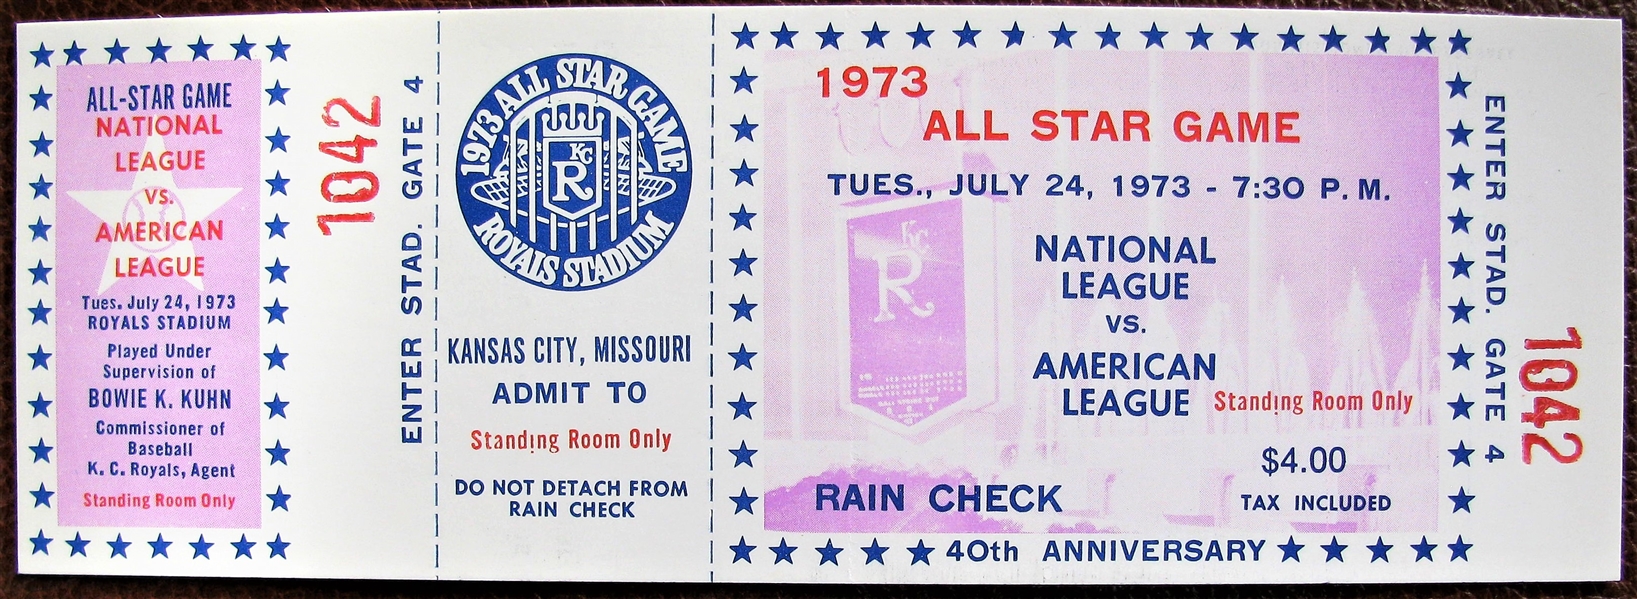 1973 ALL-STAR GAME FULL TICKET - ROYALS STADIUM